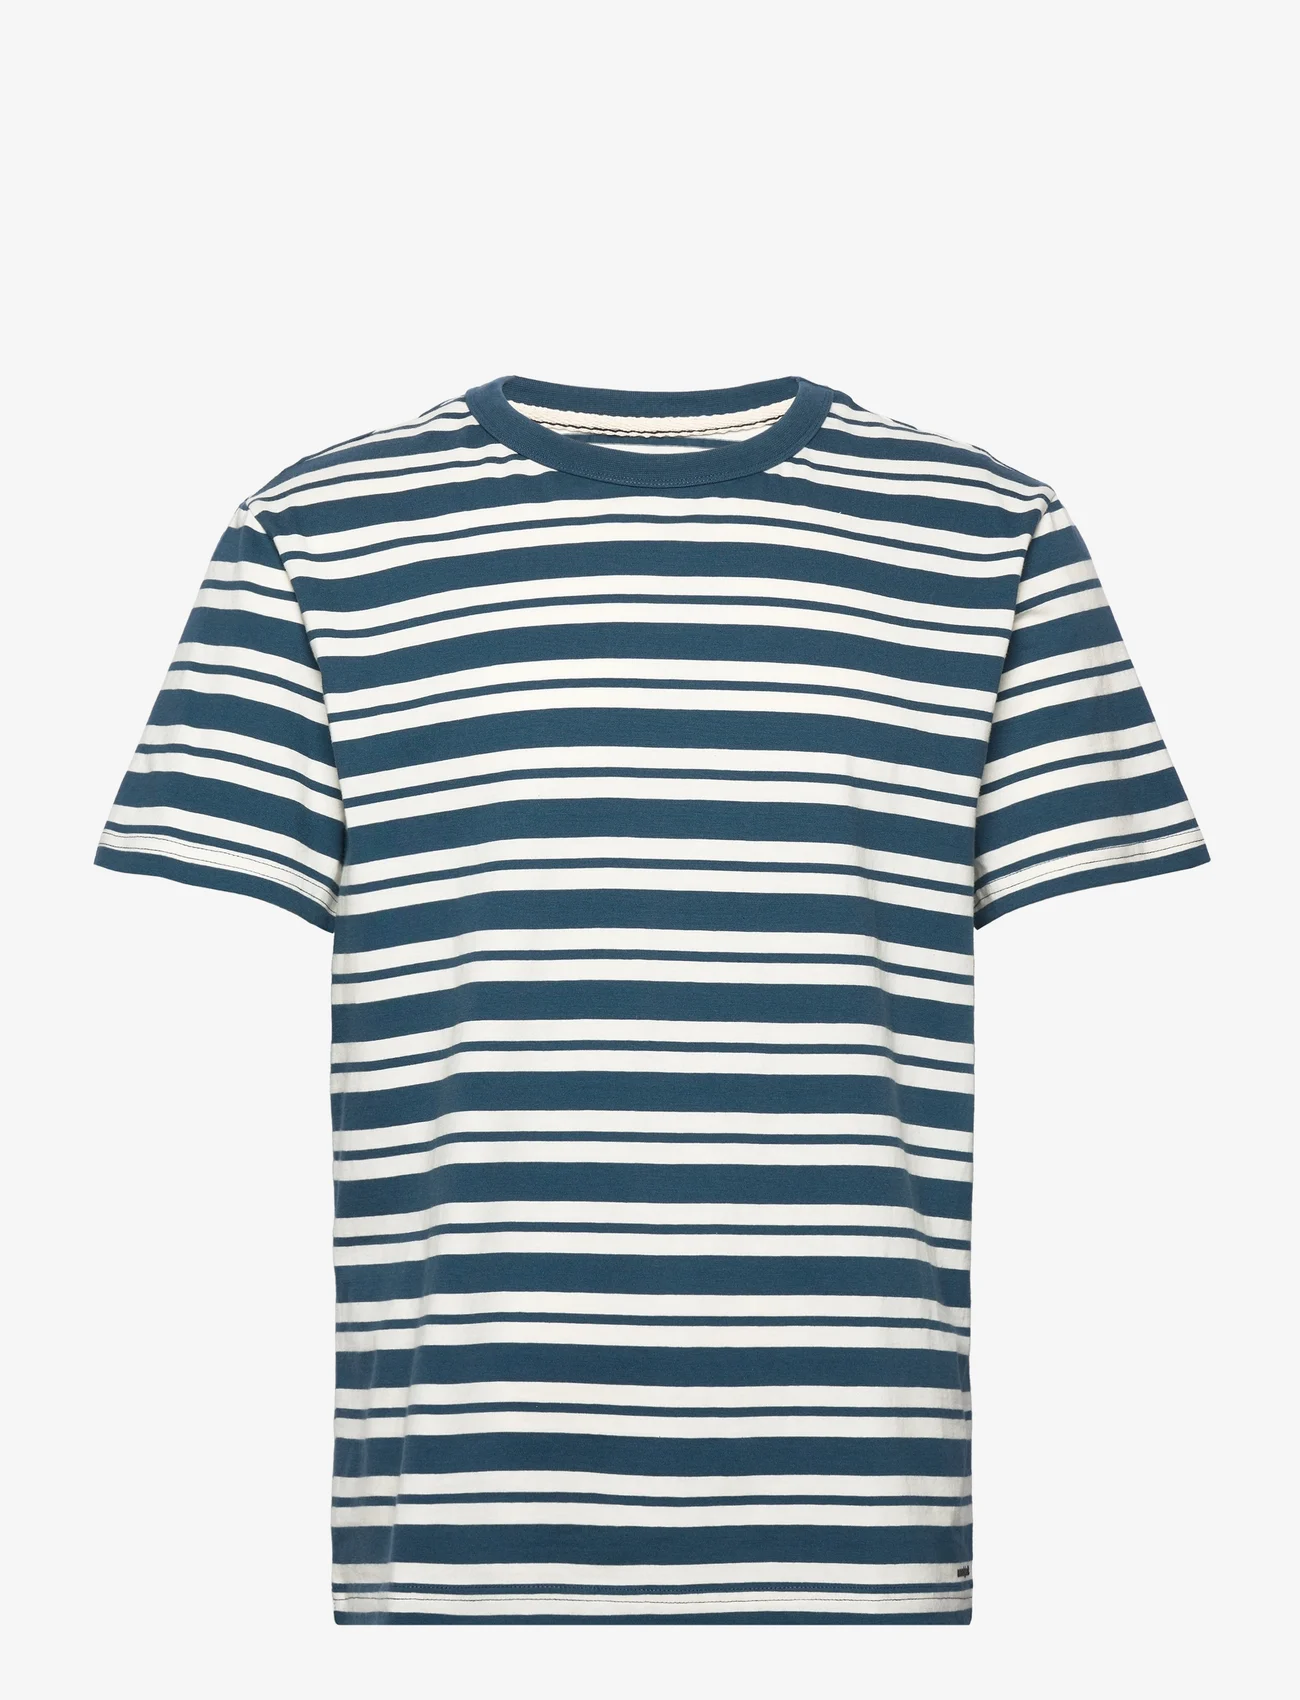 Anerkjendt - AKKIKKI NOOS STRIPE TEE - t-shirts - majolica blue - 0